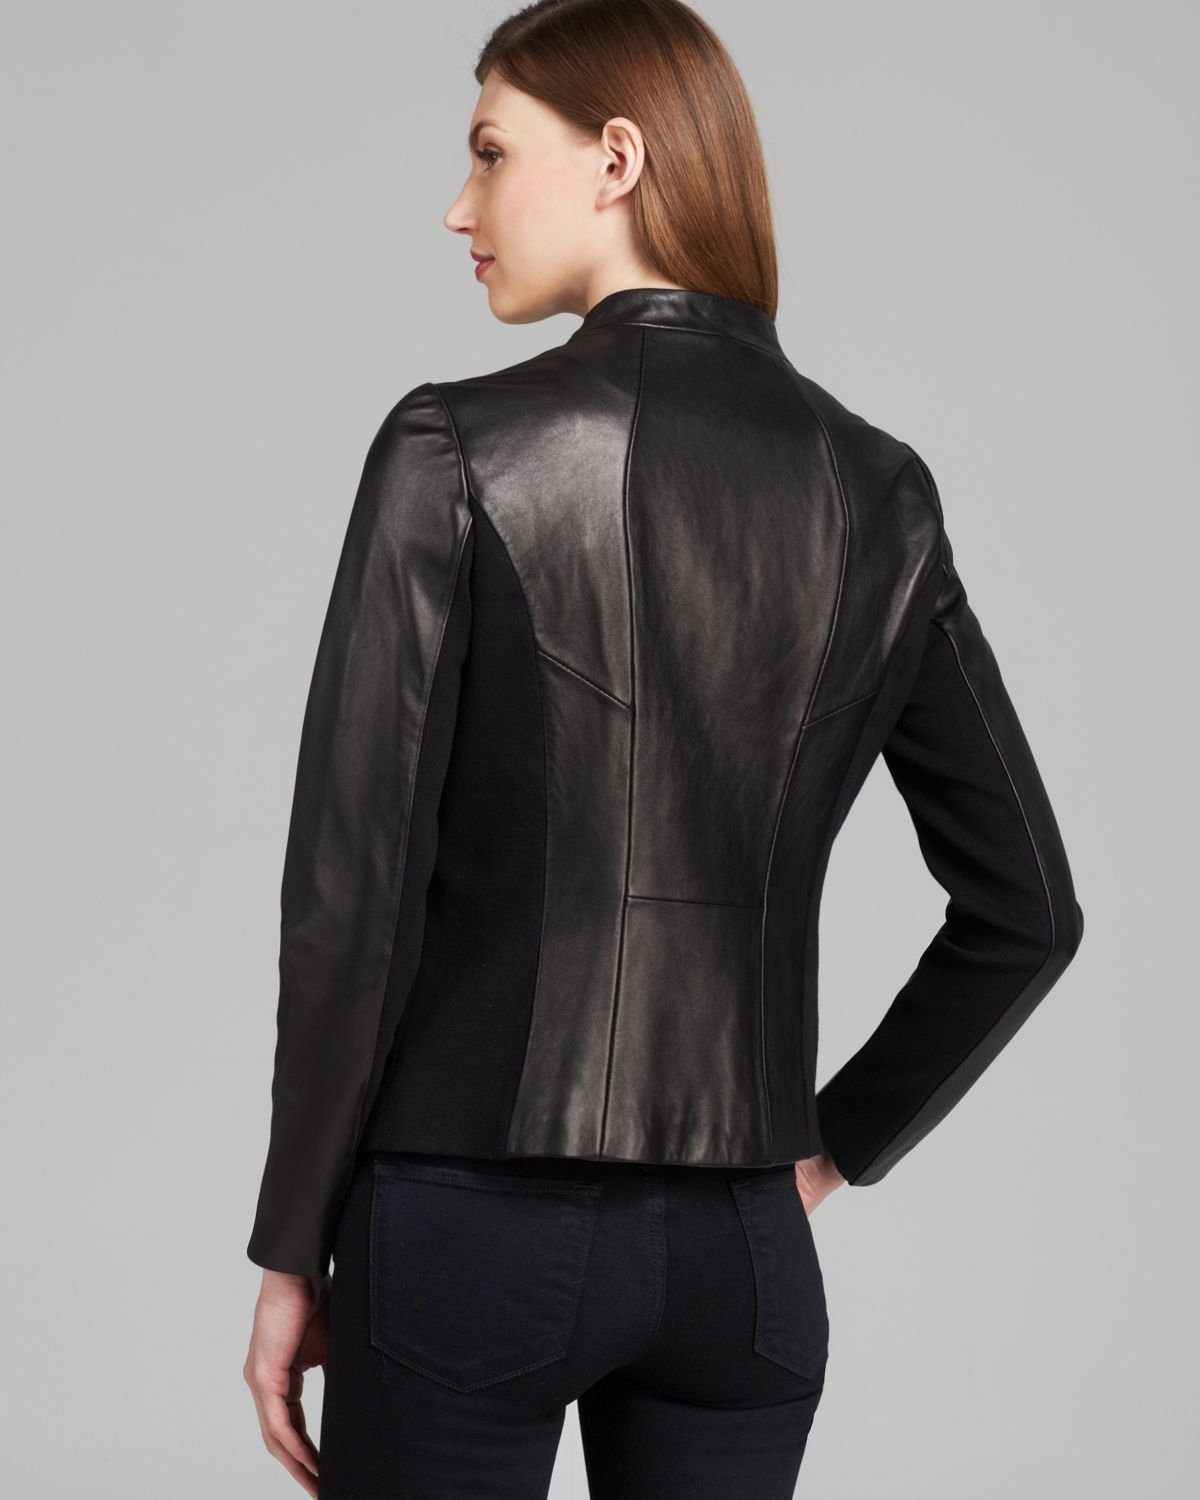 Elie Tahari Lamb Leather Jacket Online Sale, UP TO 68% OFF